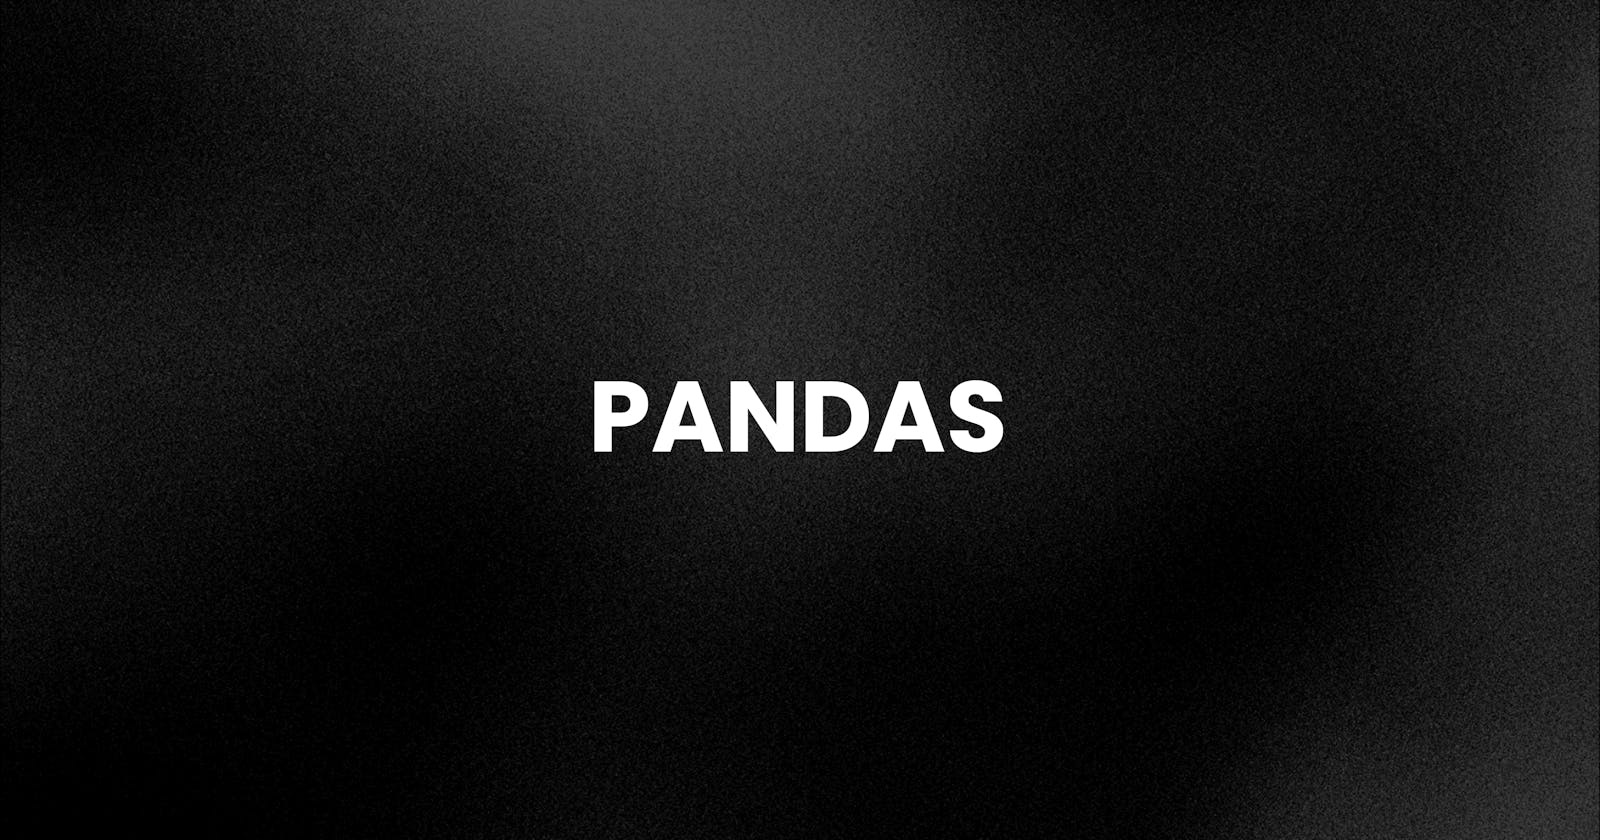 PY3. Pandas - Data Manipulation and Analysis